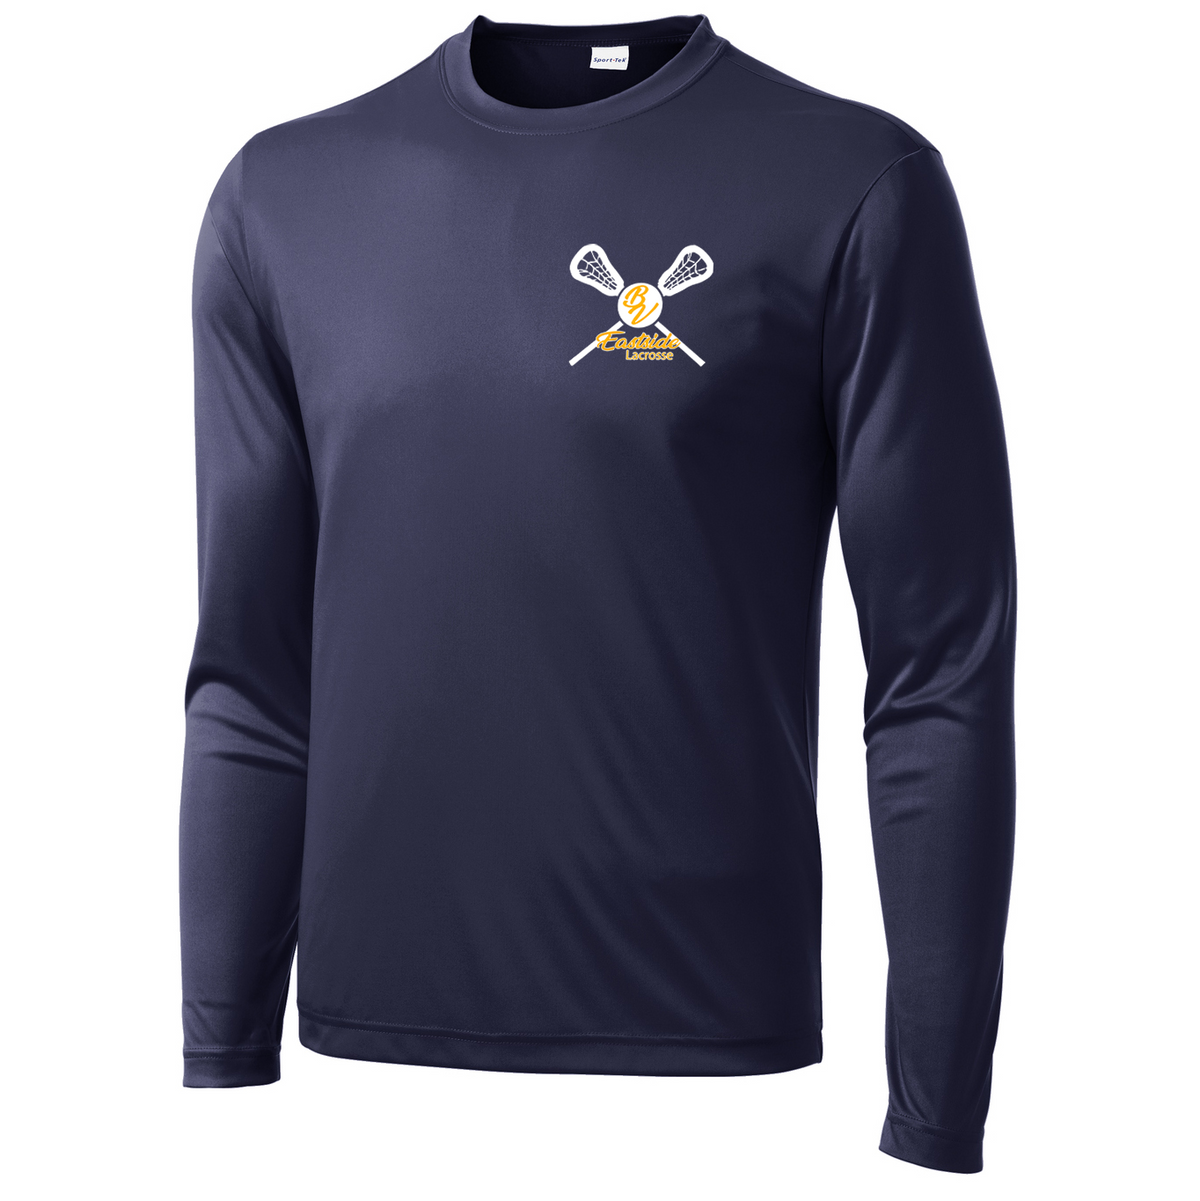 BV Eastside Lacrosse Long Sleeve Performance Shirt